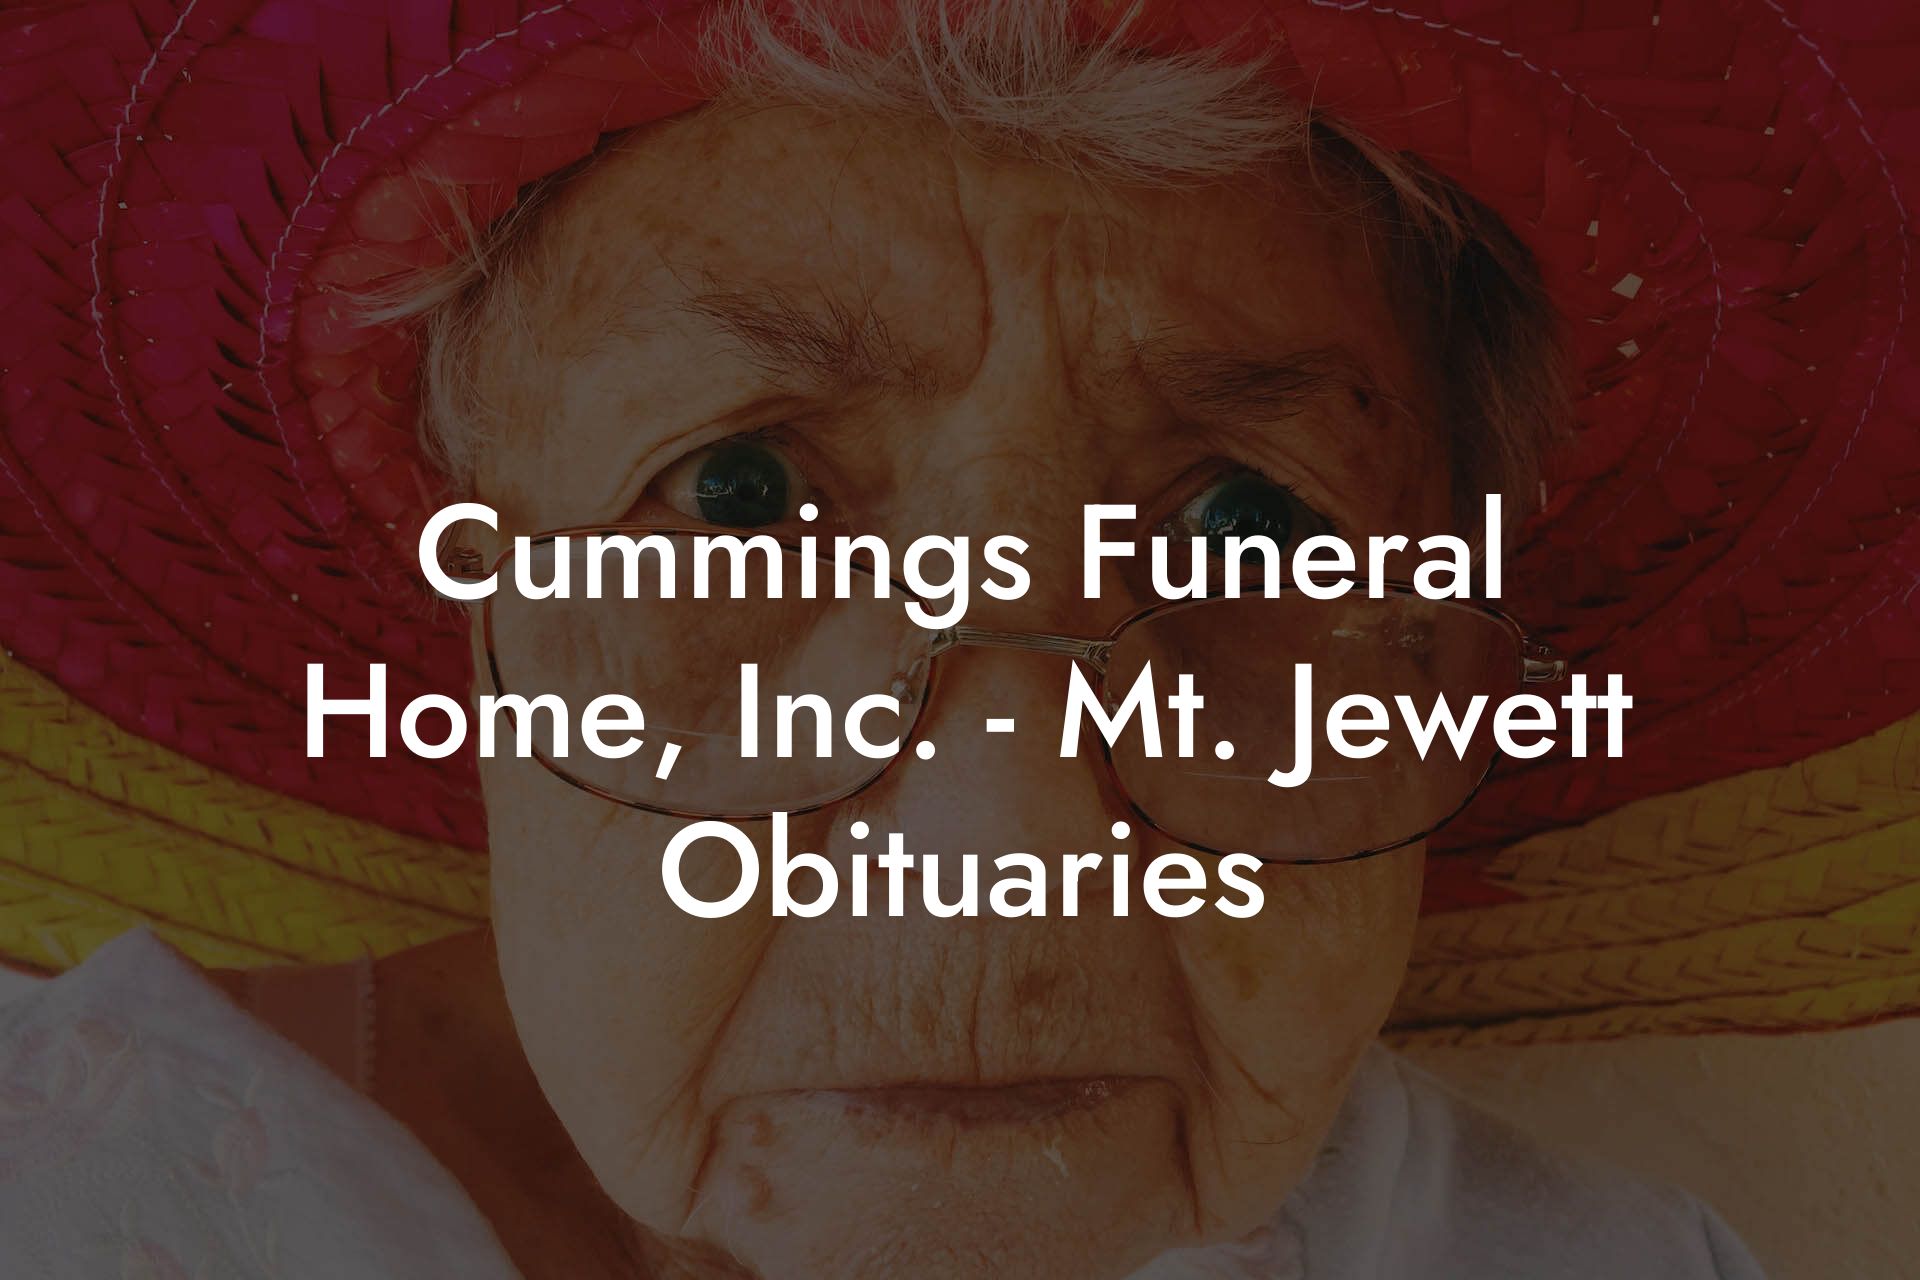 Cummings Funeral Home, Inc. - Mt. Jewett Obituaries